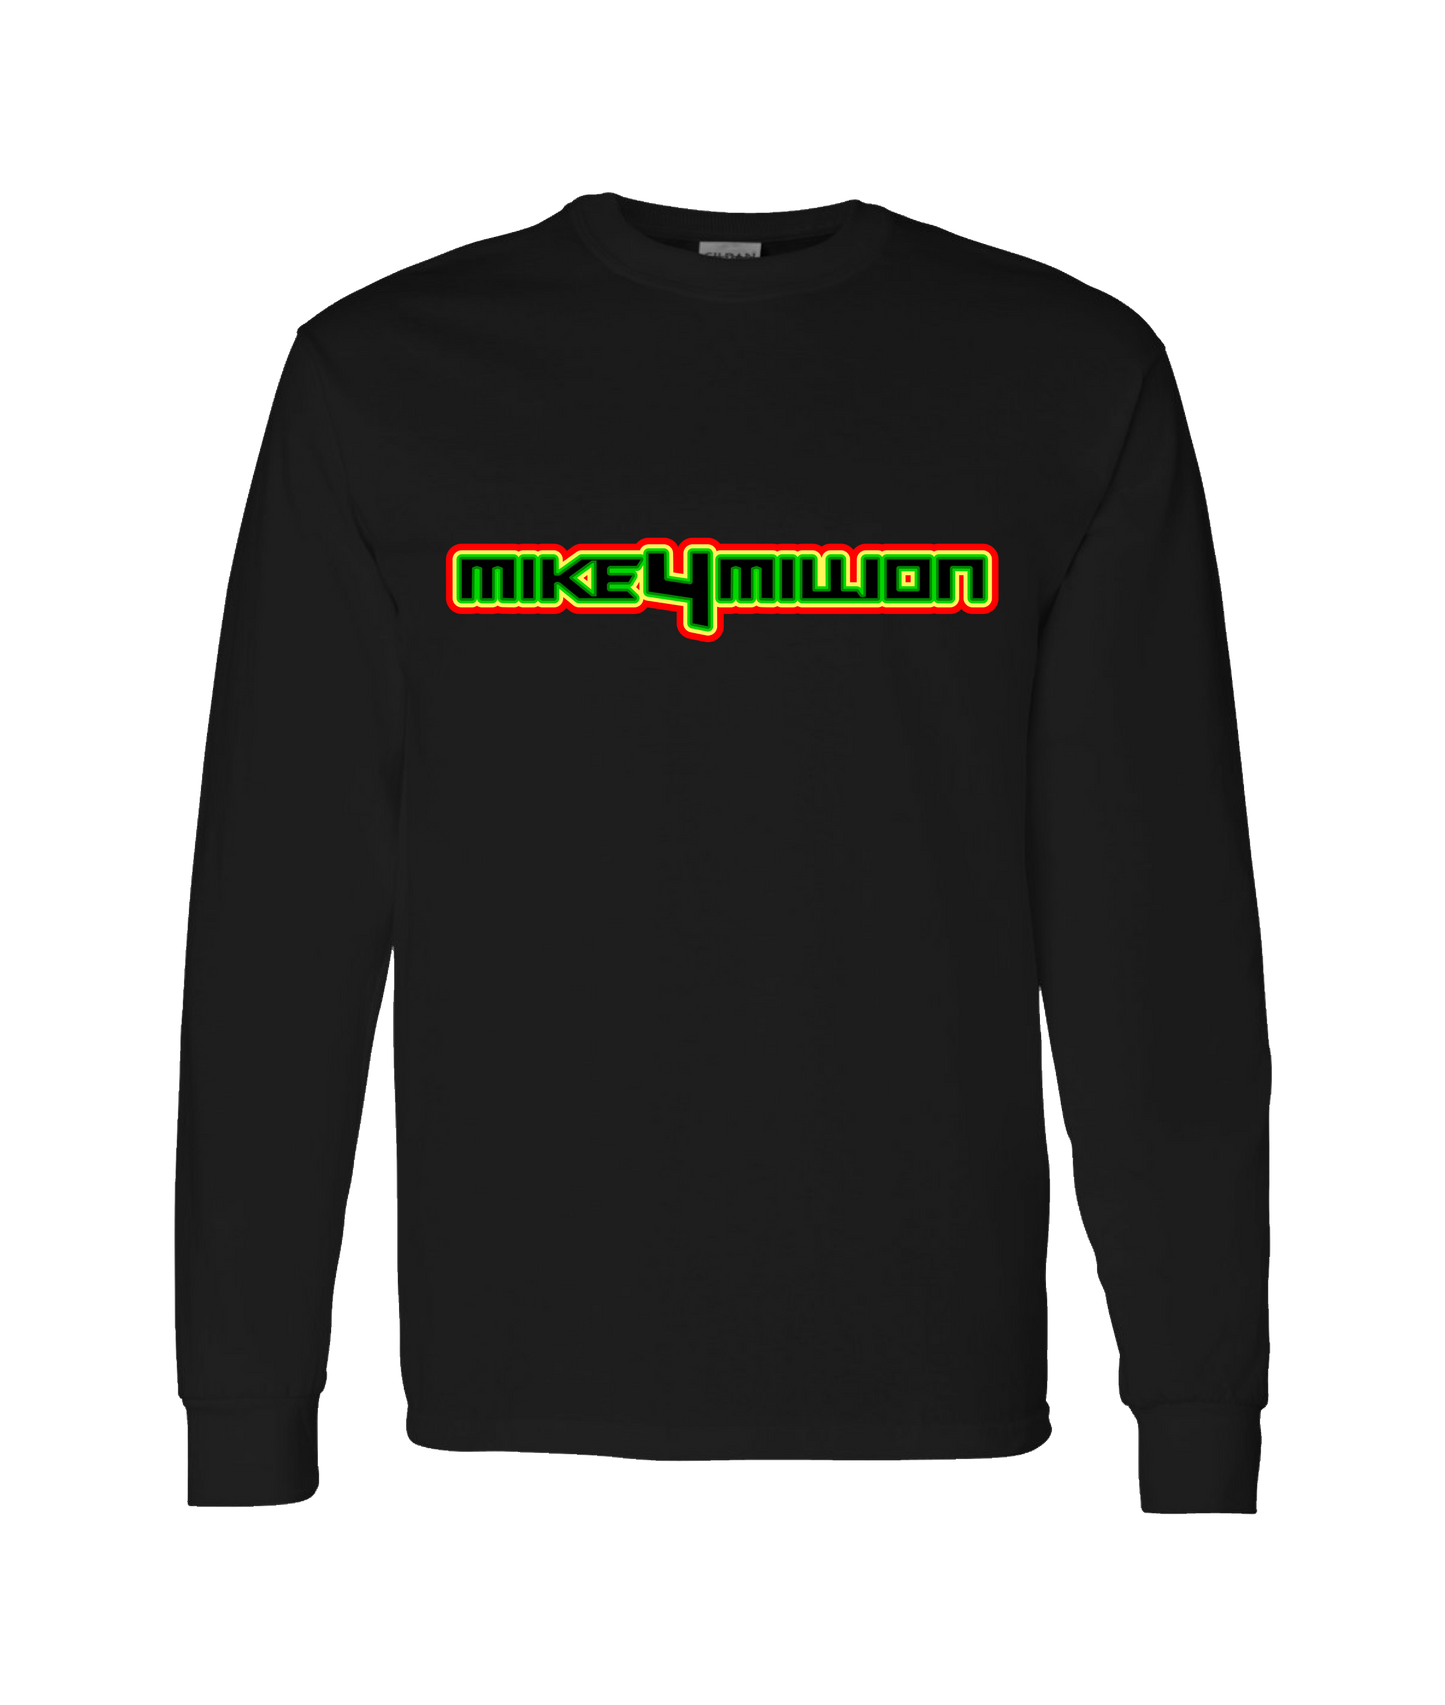 Mike4Million - DESIGN 1 - Black Long Sleeve T